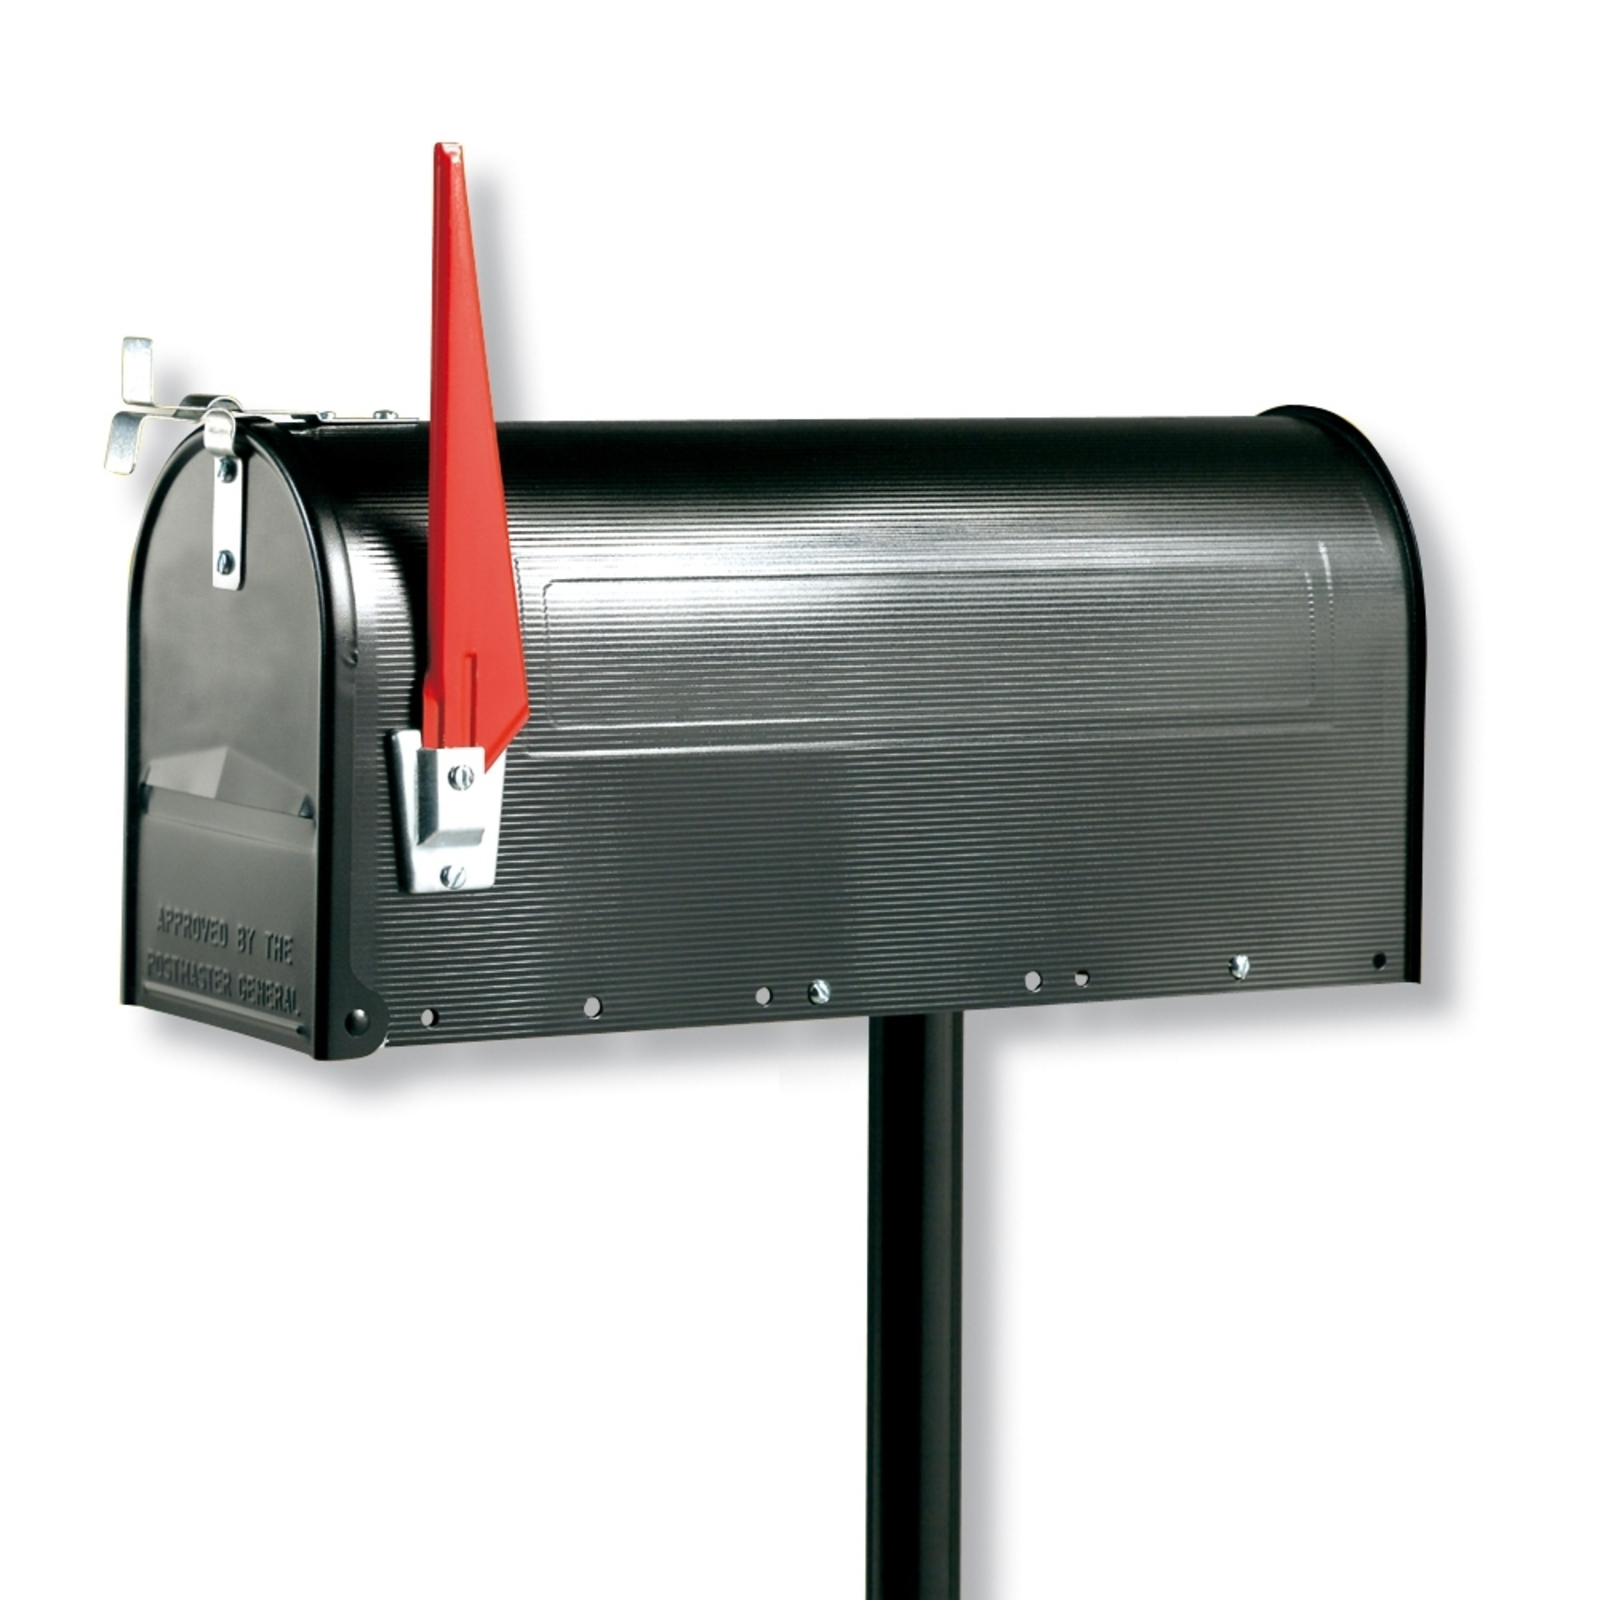 893 S -tukipylväs U.S. Mailbox -postilaatikolle